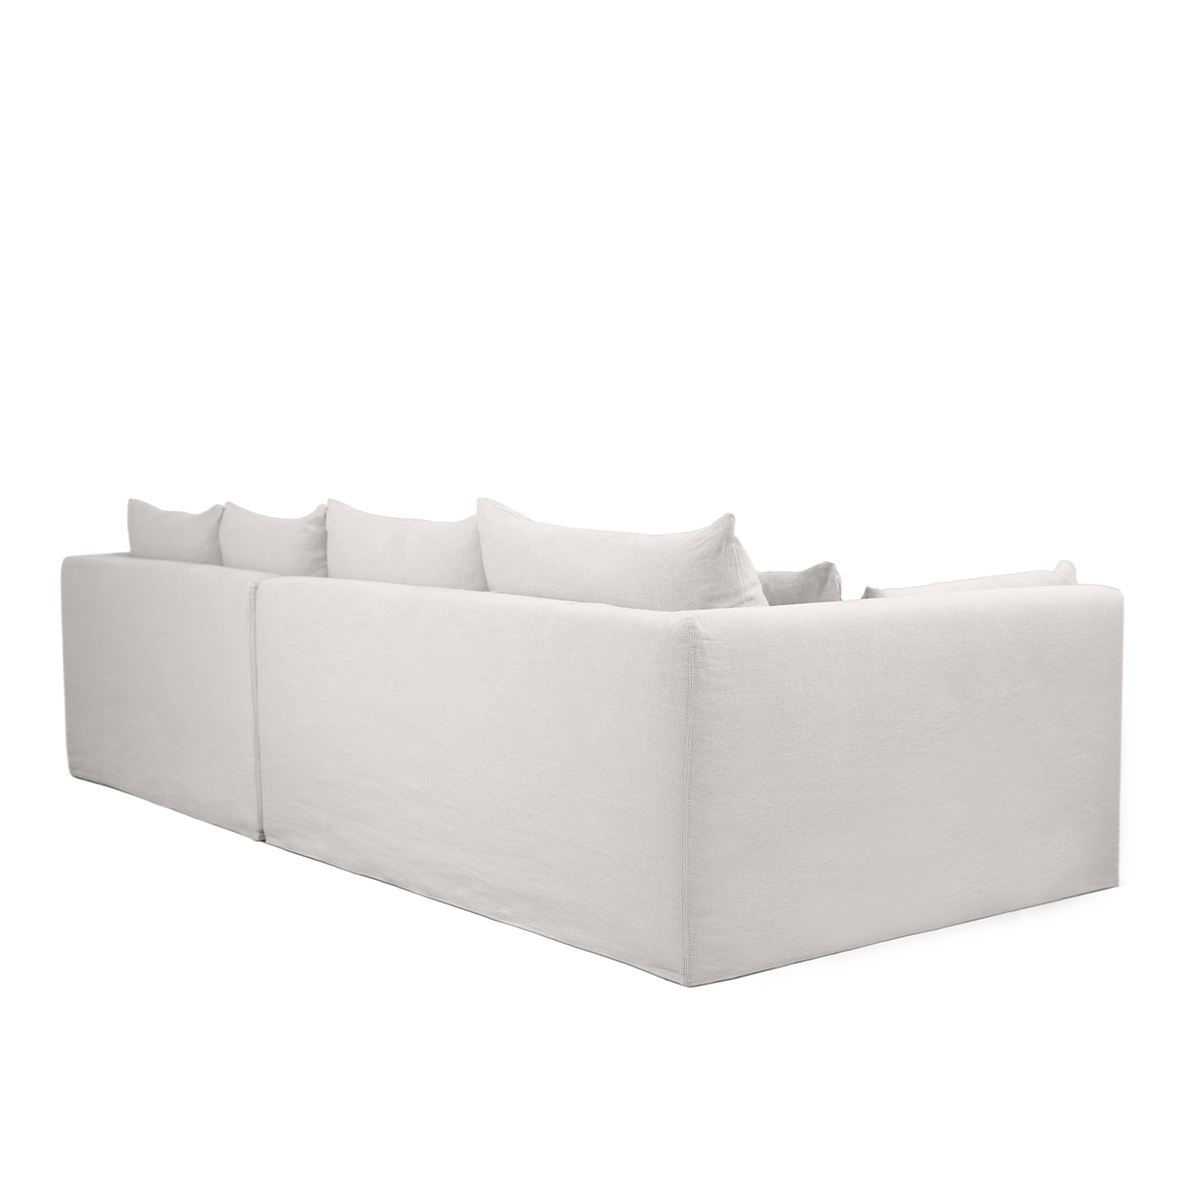 SuperBox corner sofa - Right angle, L335 x P180 x H85 cm - Linen - image 4